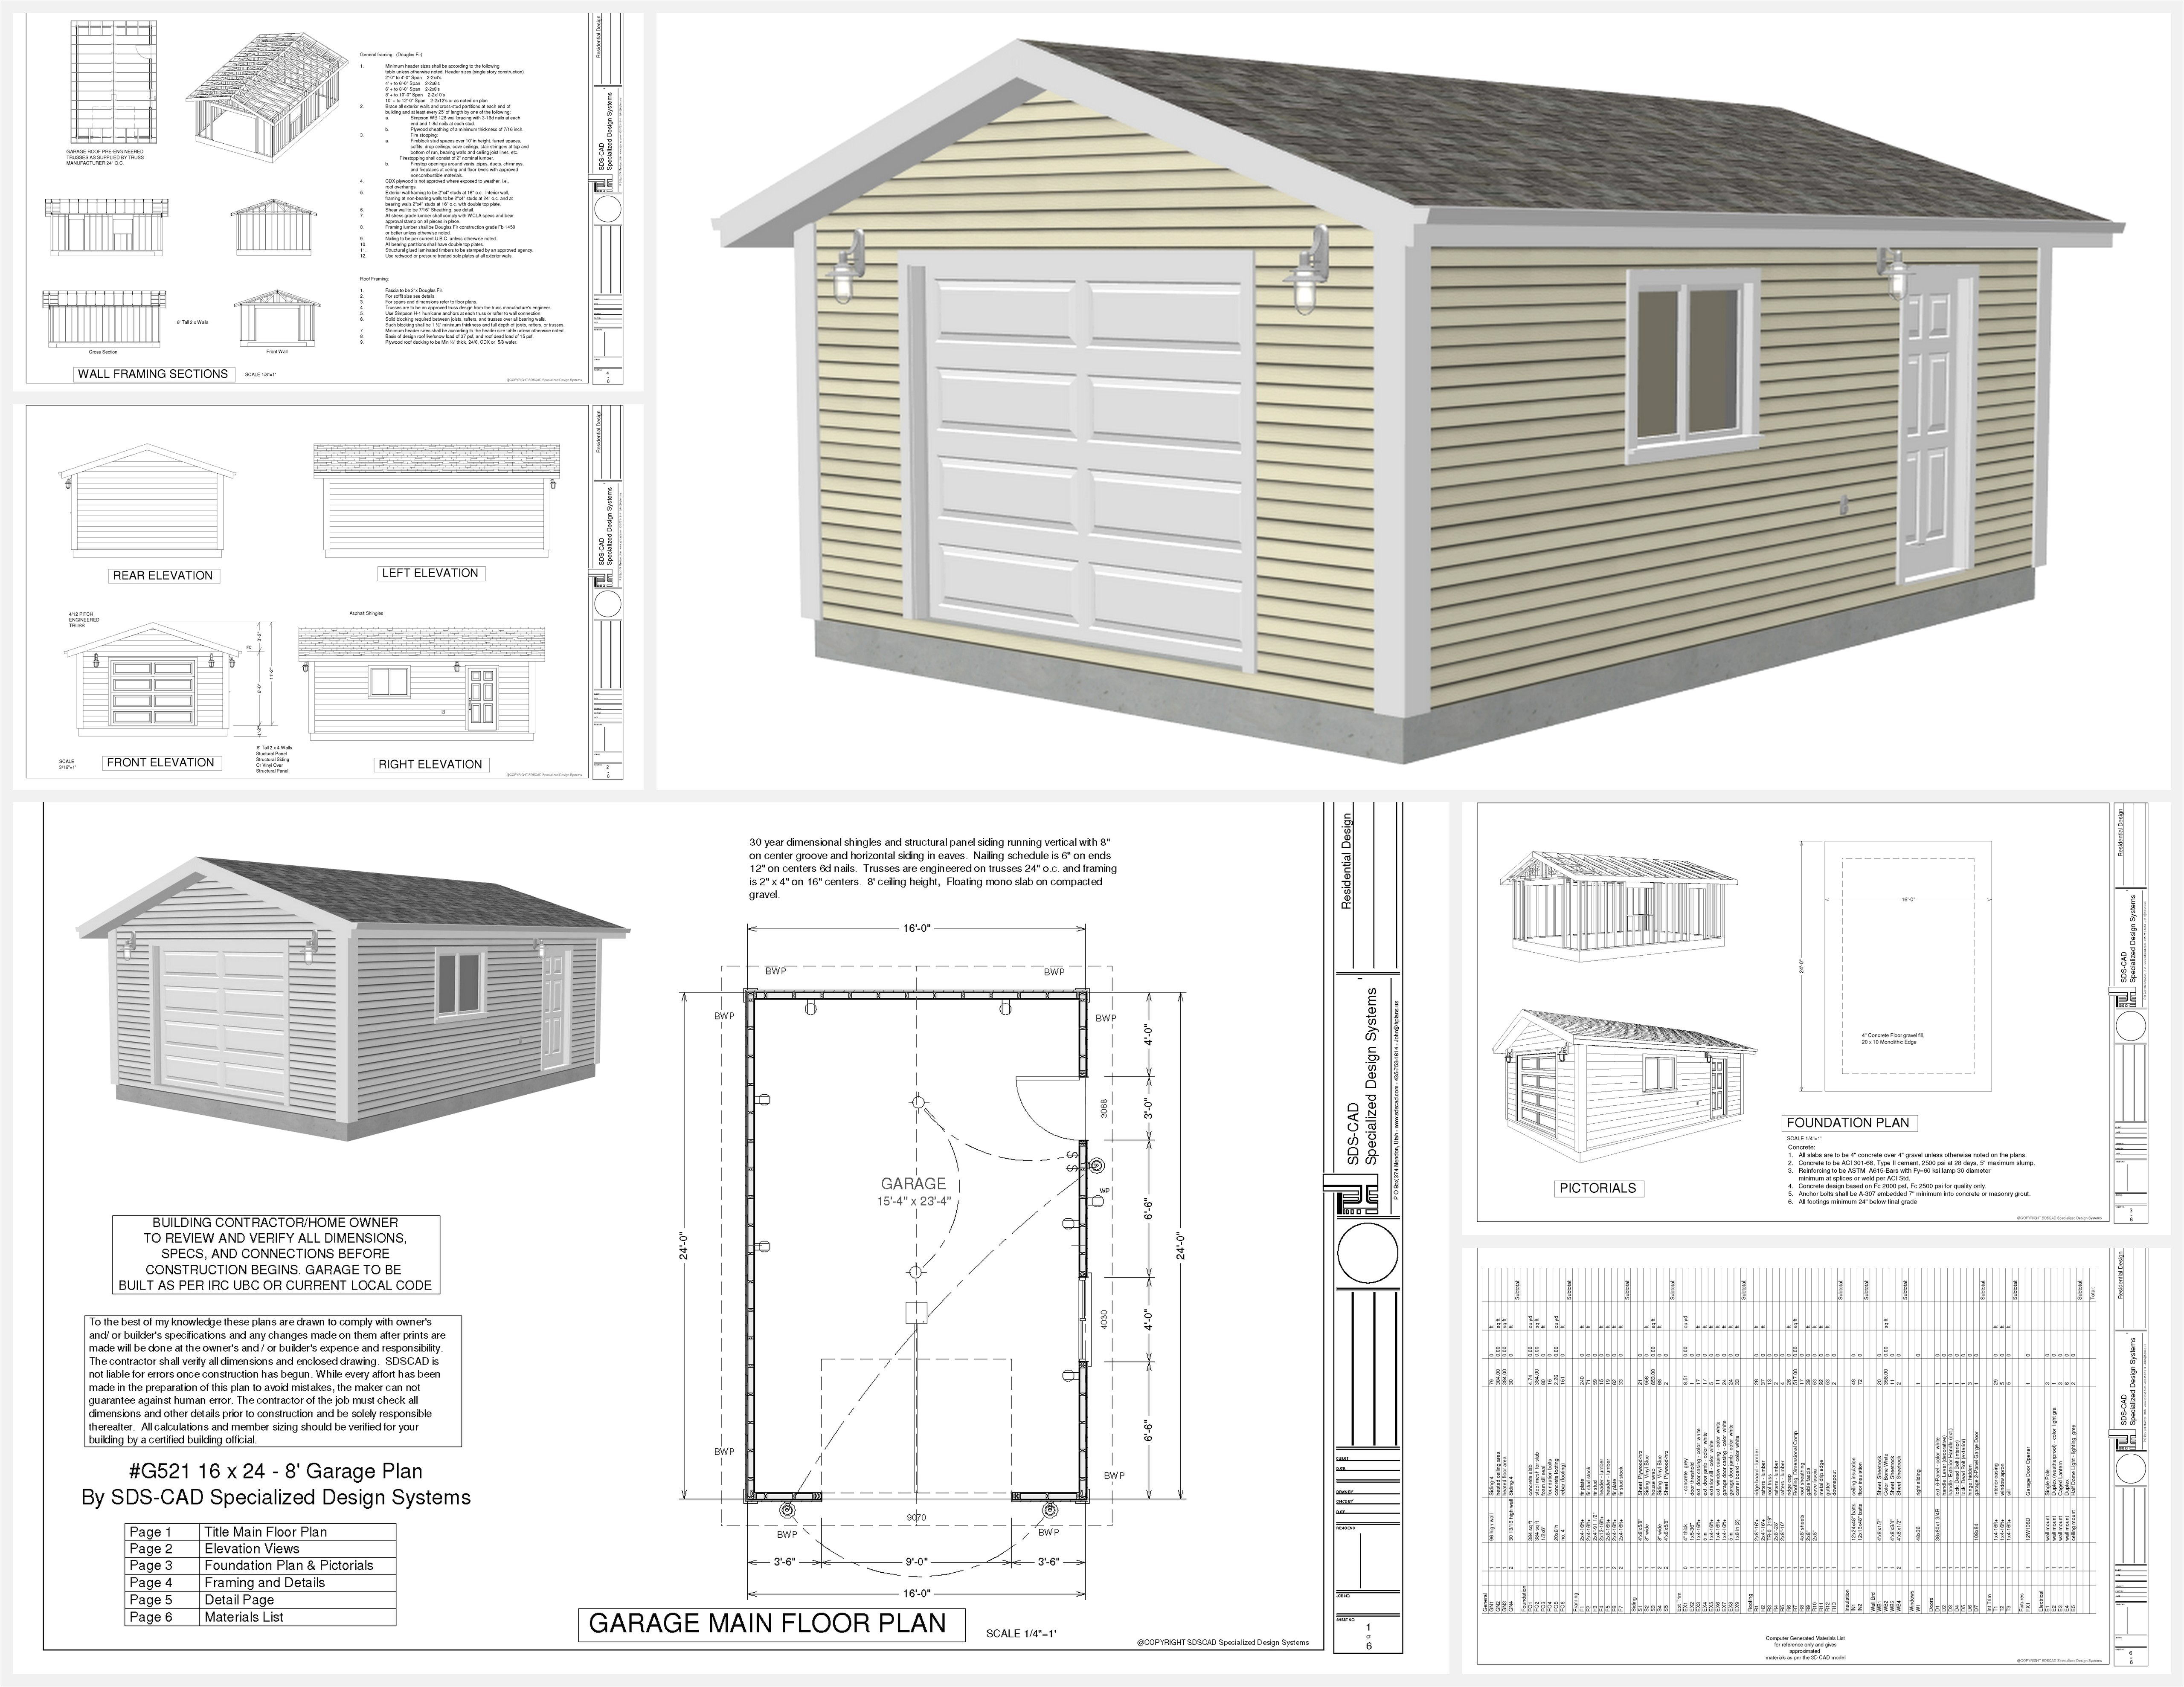 home depot garage plans designs